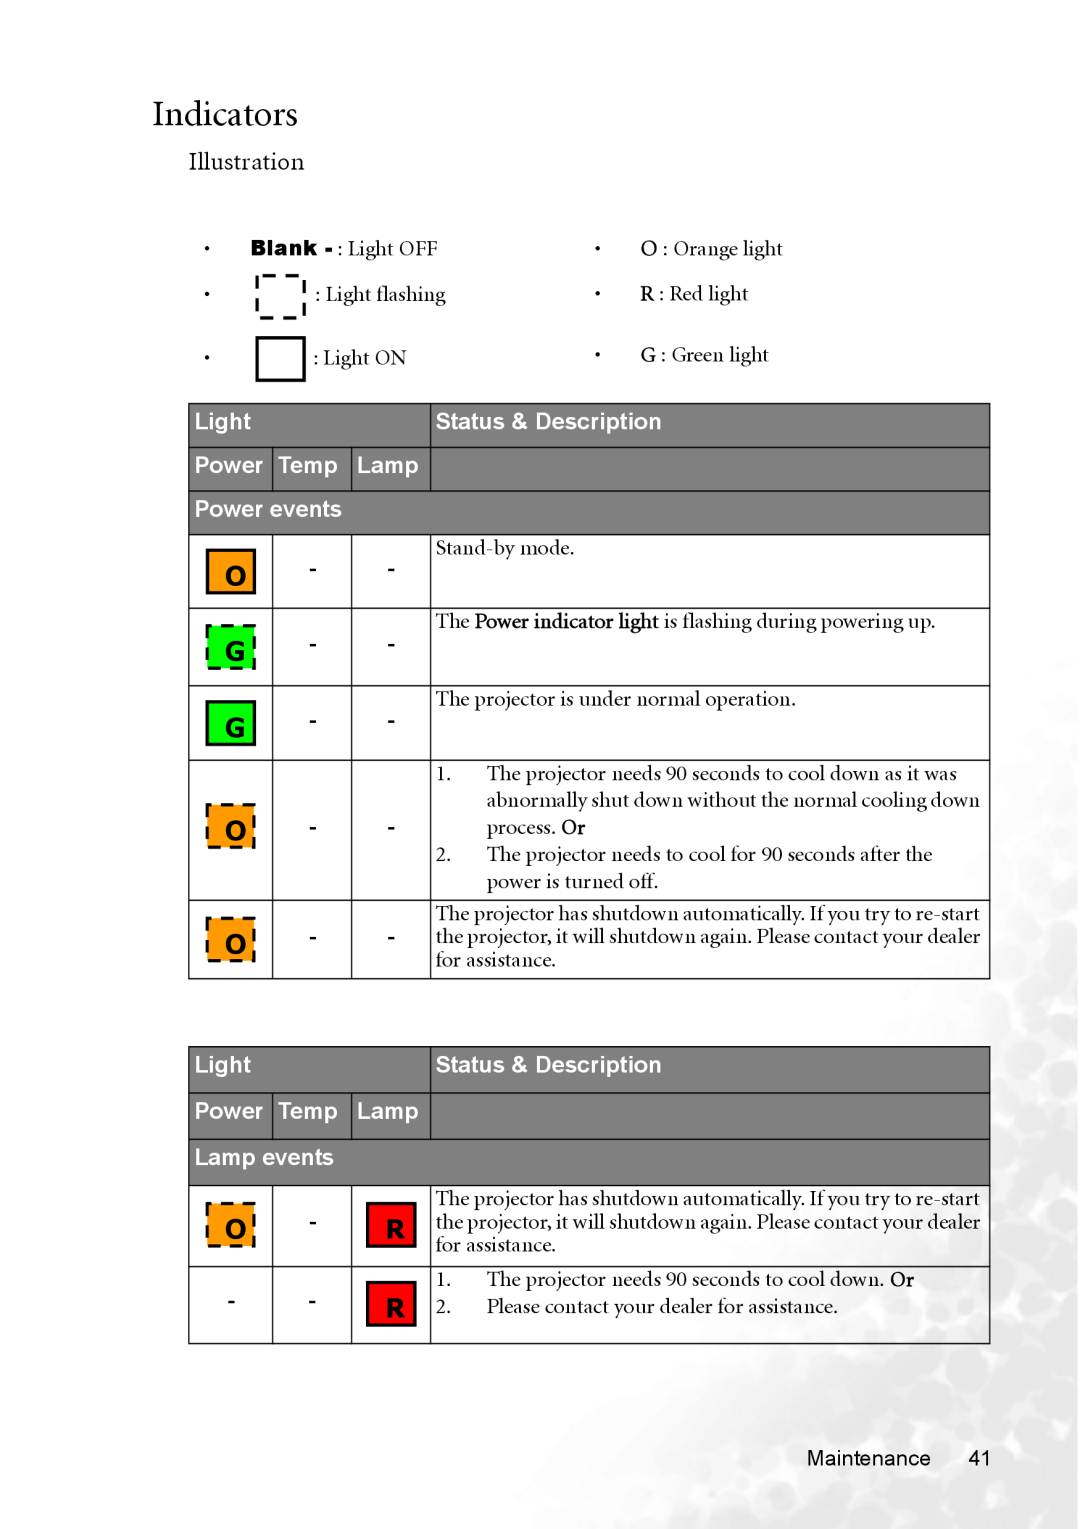 BenQ MP620p user manual Indicators, Light, Status & Description, Temp, Power events, Lamp events 